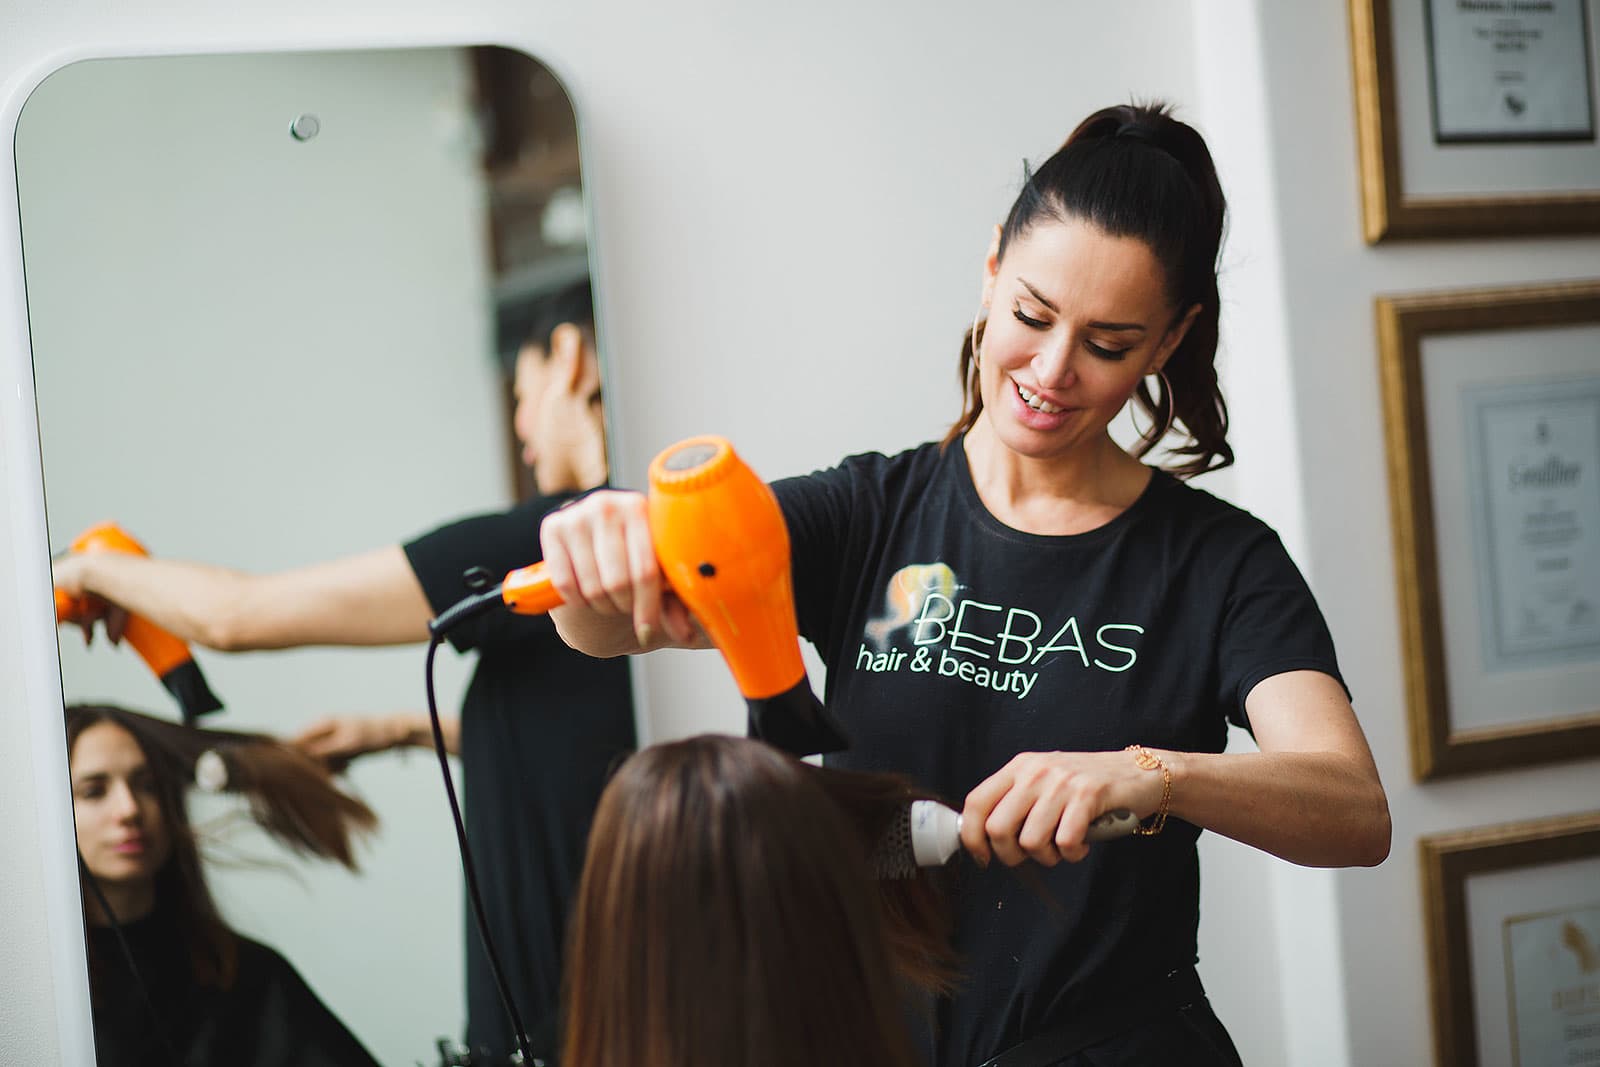 Bebas Hair & Beauty – Hairdressers